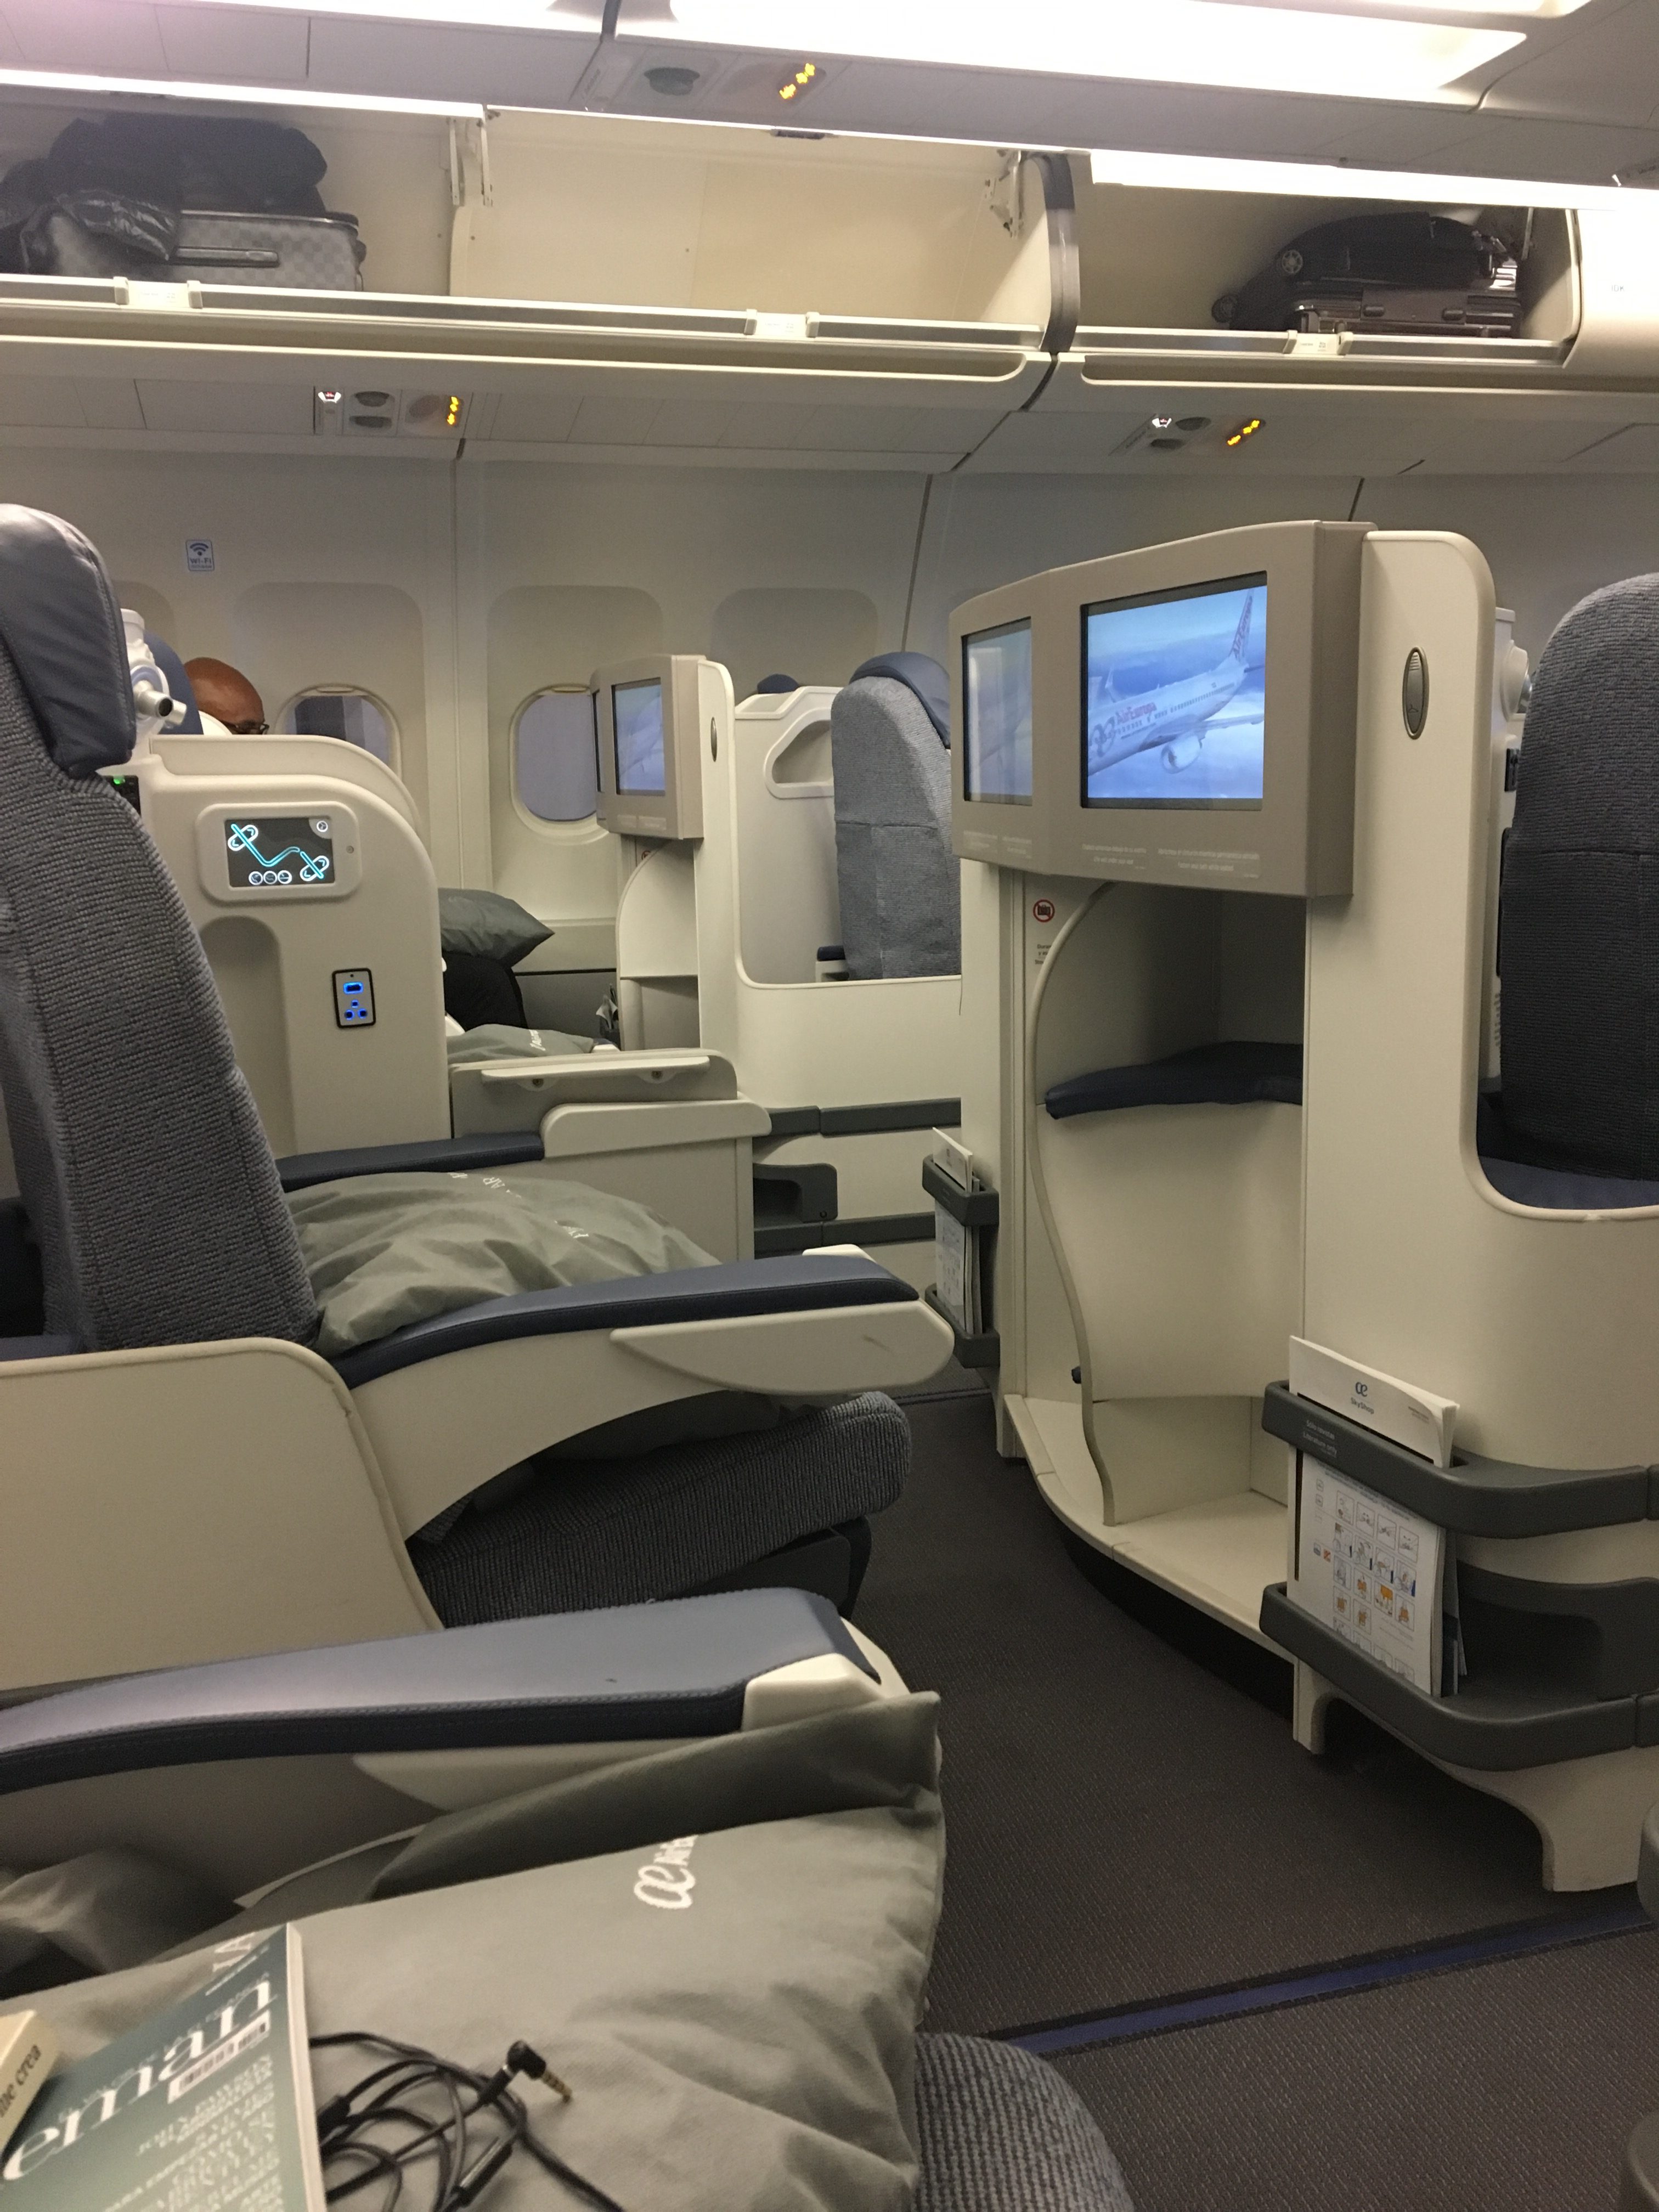 Air Europa Customer Reviews Skytrax